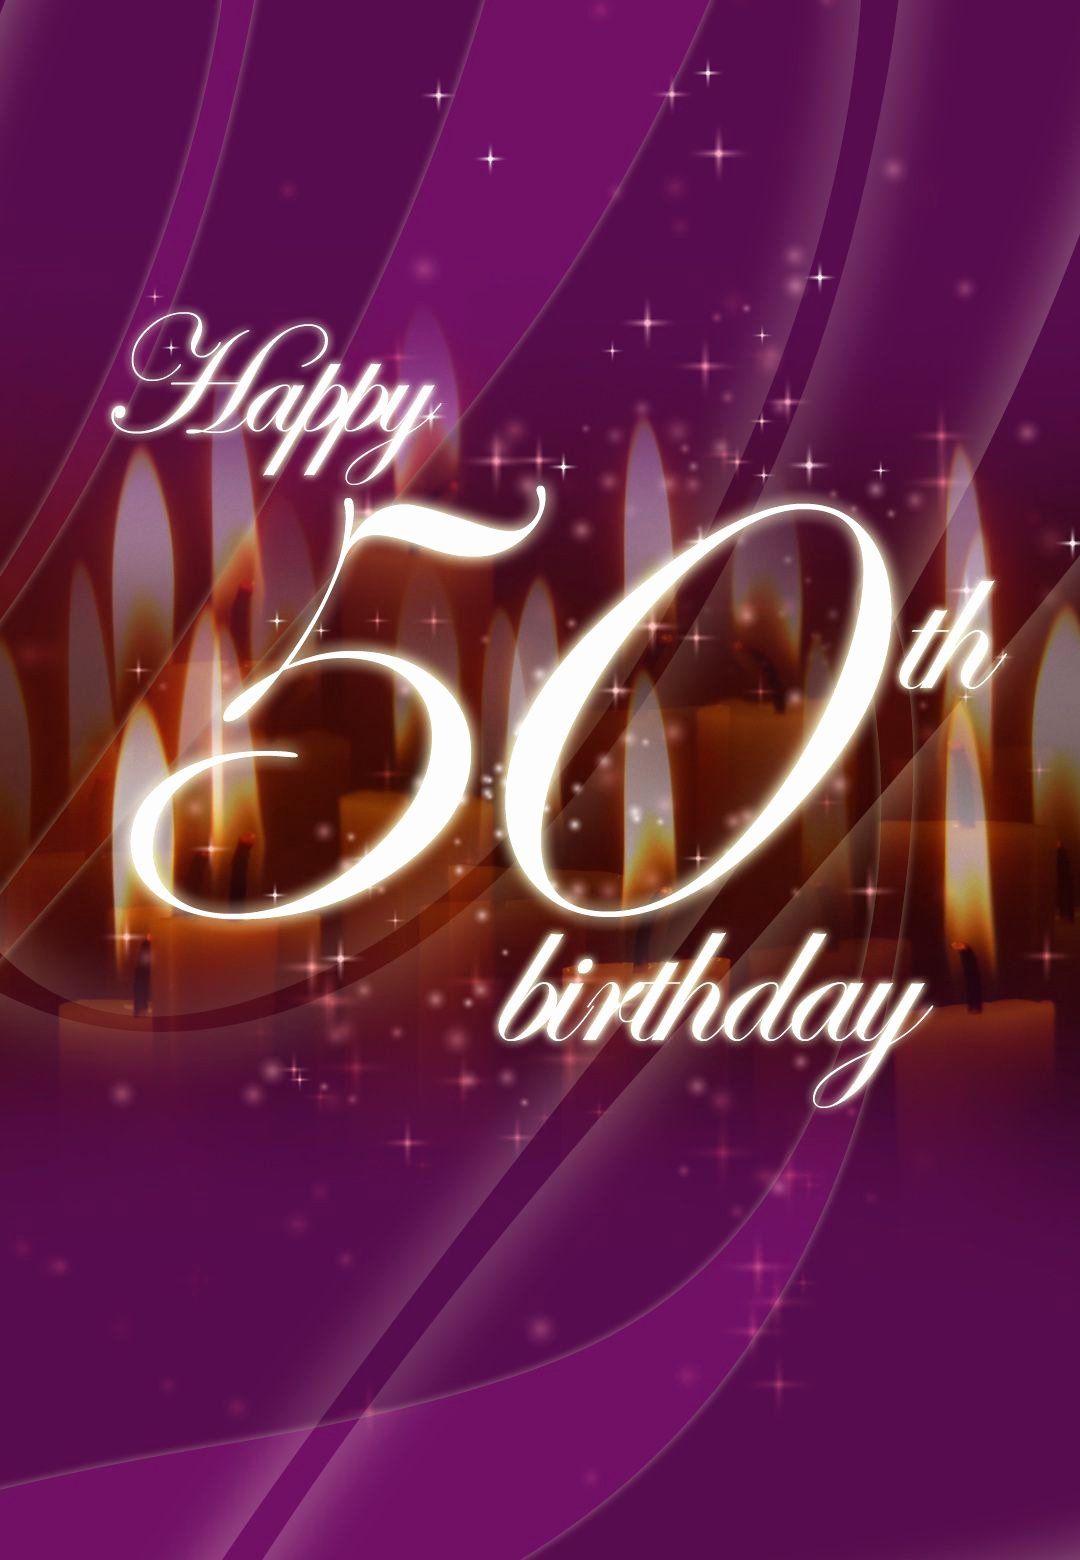 Free Belated Birthday Image. Happy 50th birthday, Happy 50th birthday wishes, 50th birthday cards